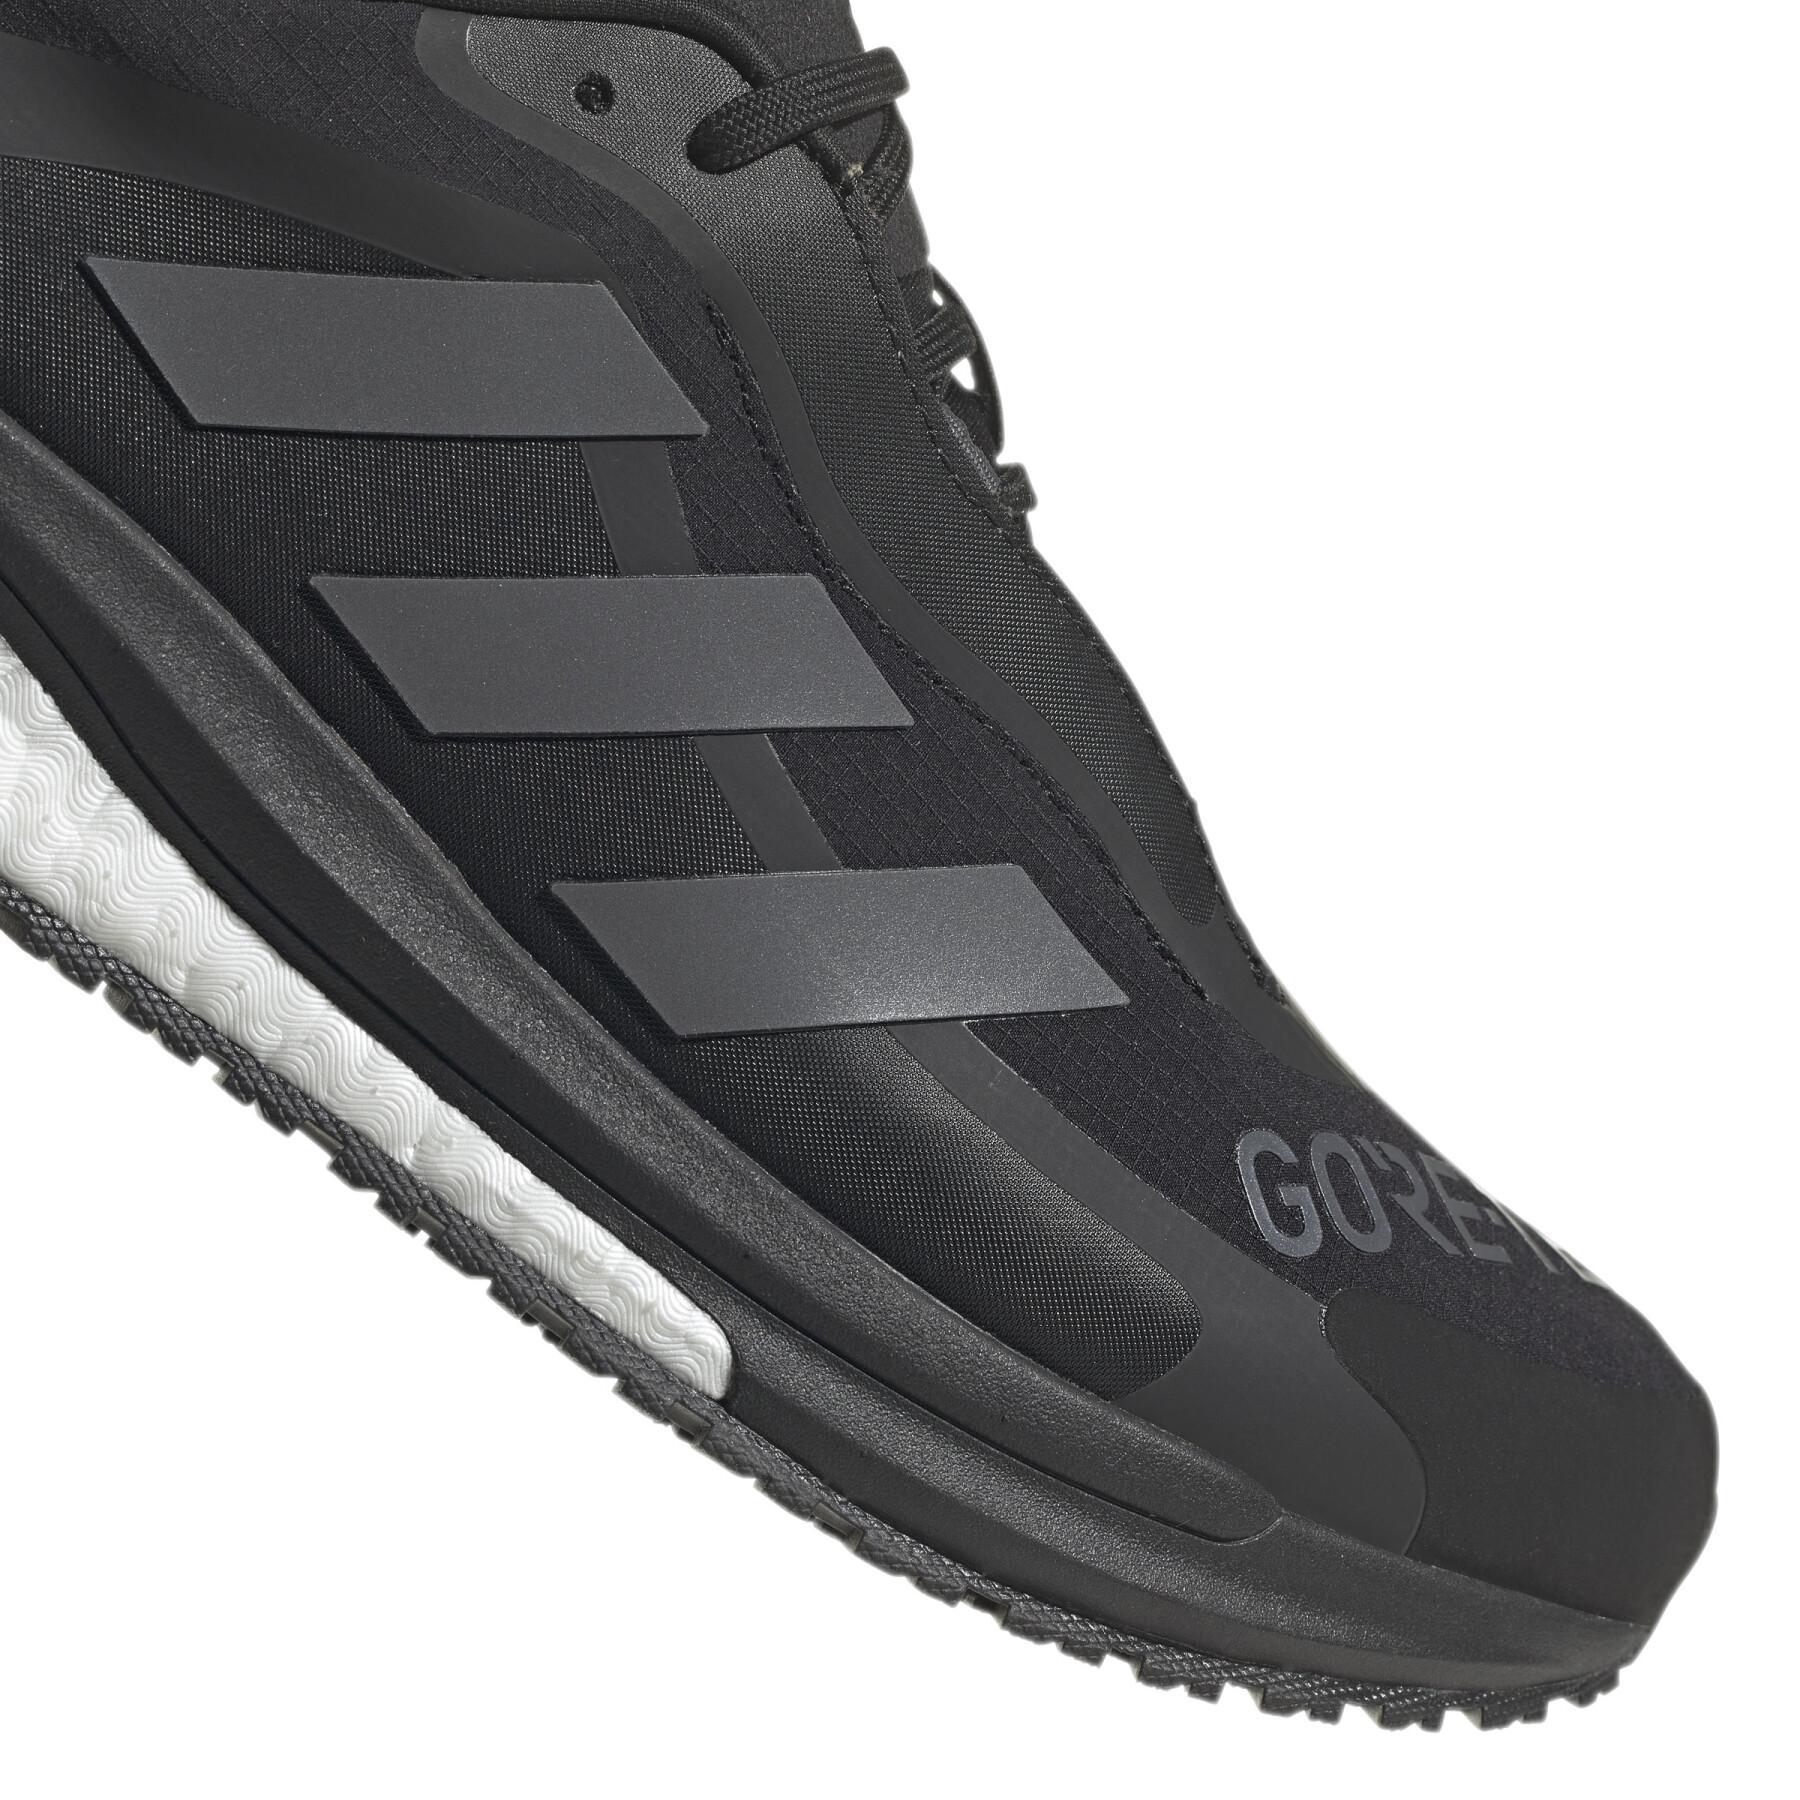 Chaussures de running adidas SolarGlide 4 GORE-TEX